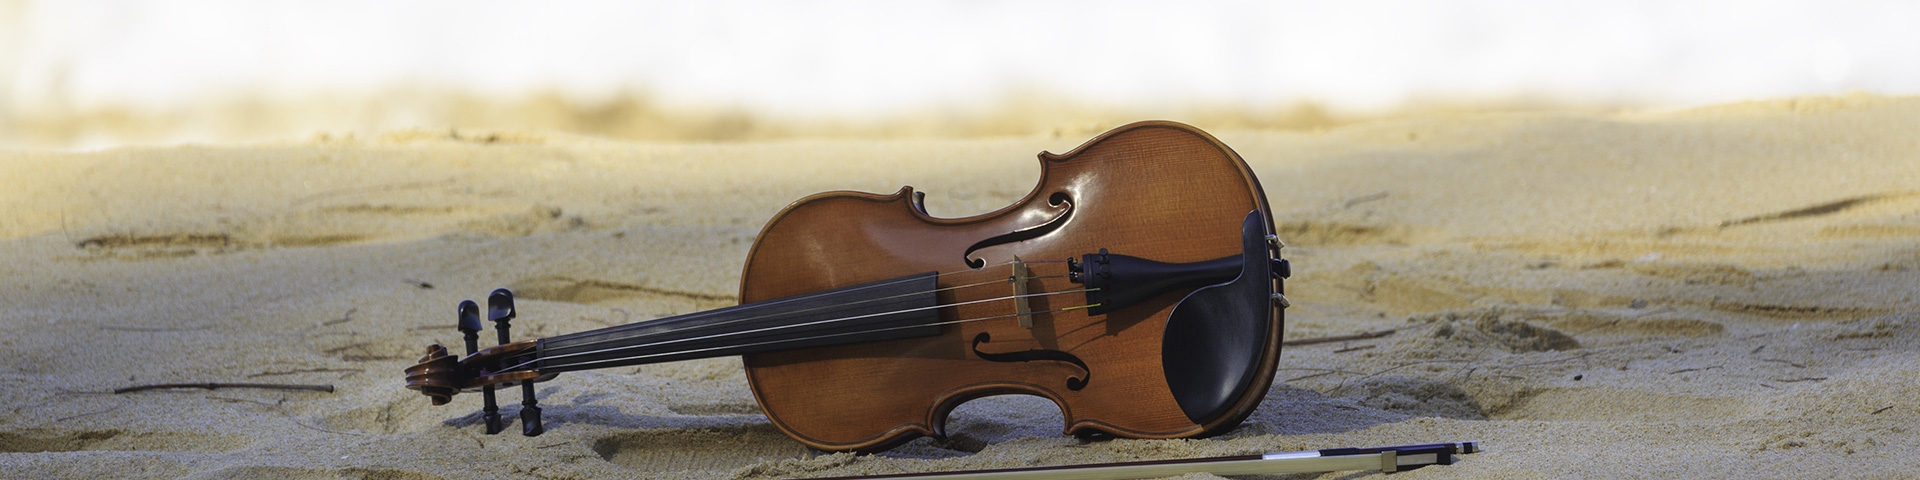 Klamuze - klassieke muziek aan zee viool